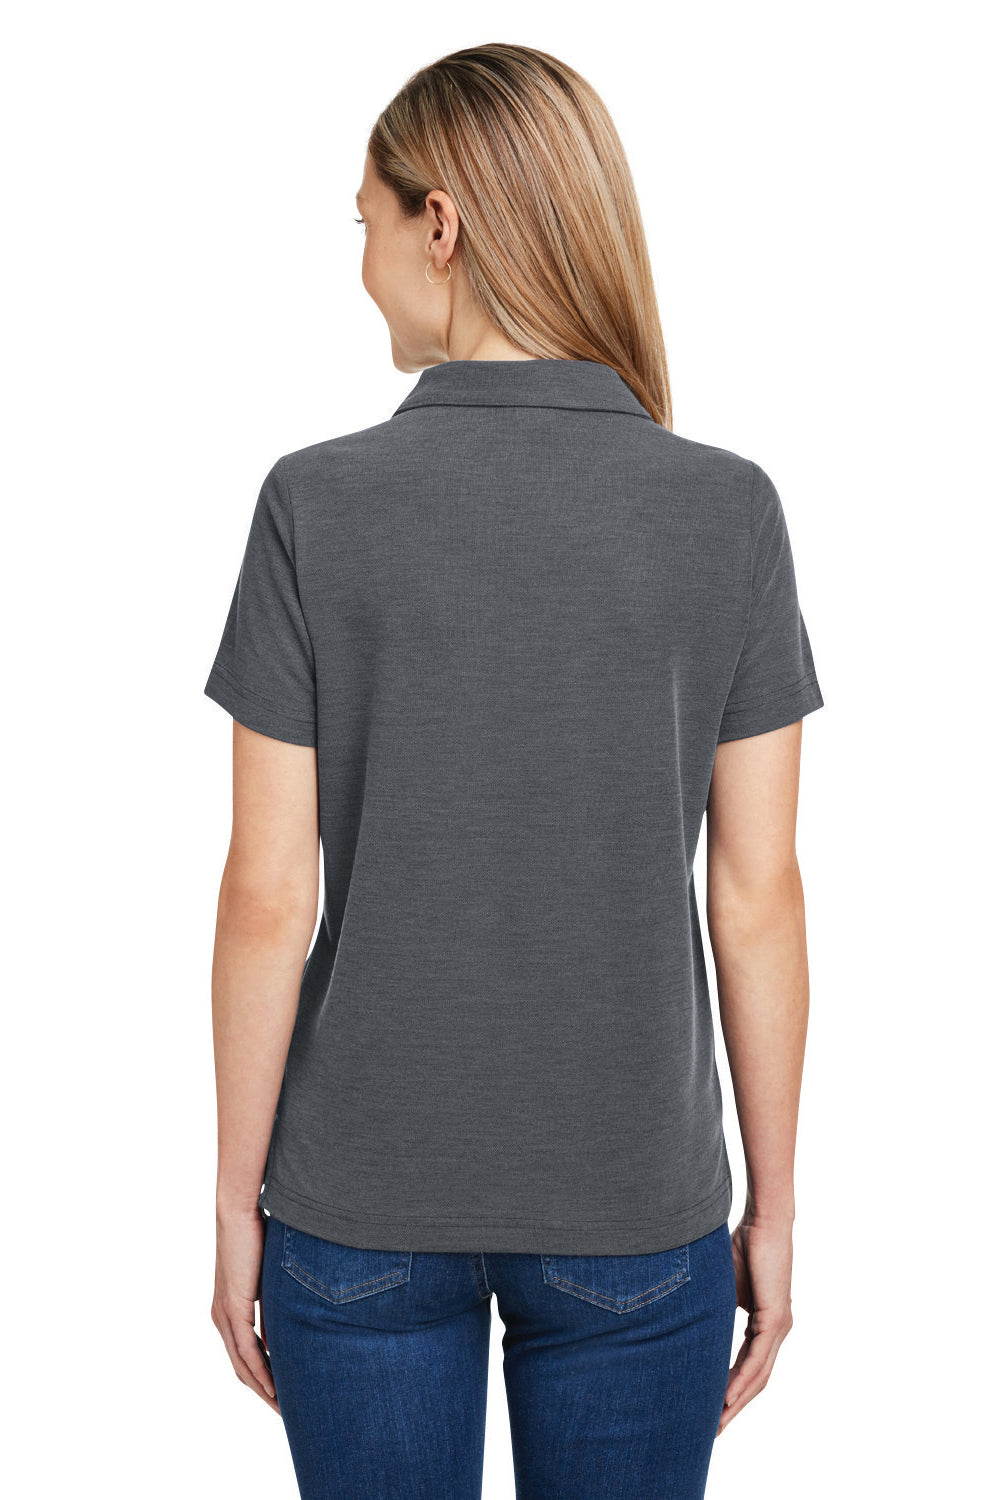 Core 365 CE112W Womens Fusion ChromaSoft Performance Moisture Wicking Pique Short Sleeve Polo Shirt Heather Carbon Grey Back